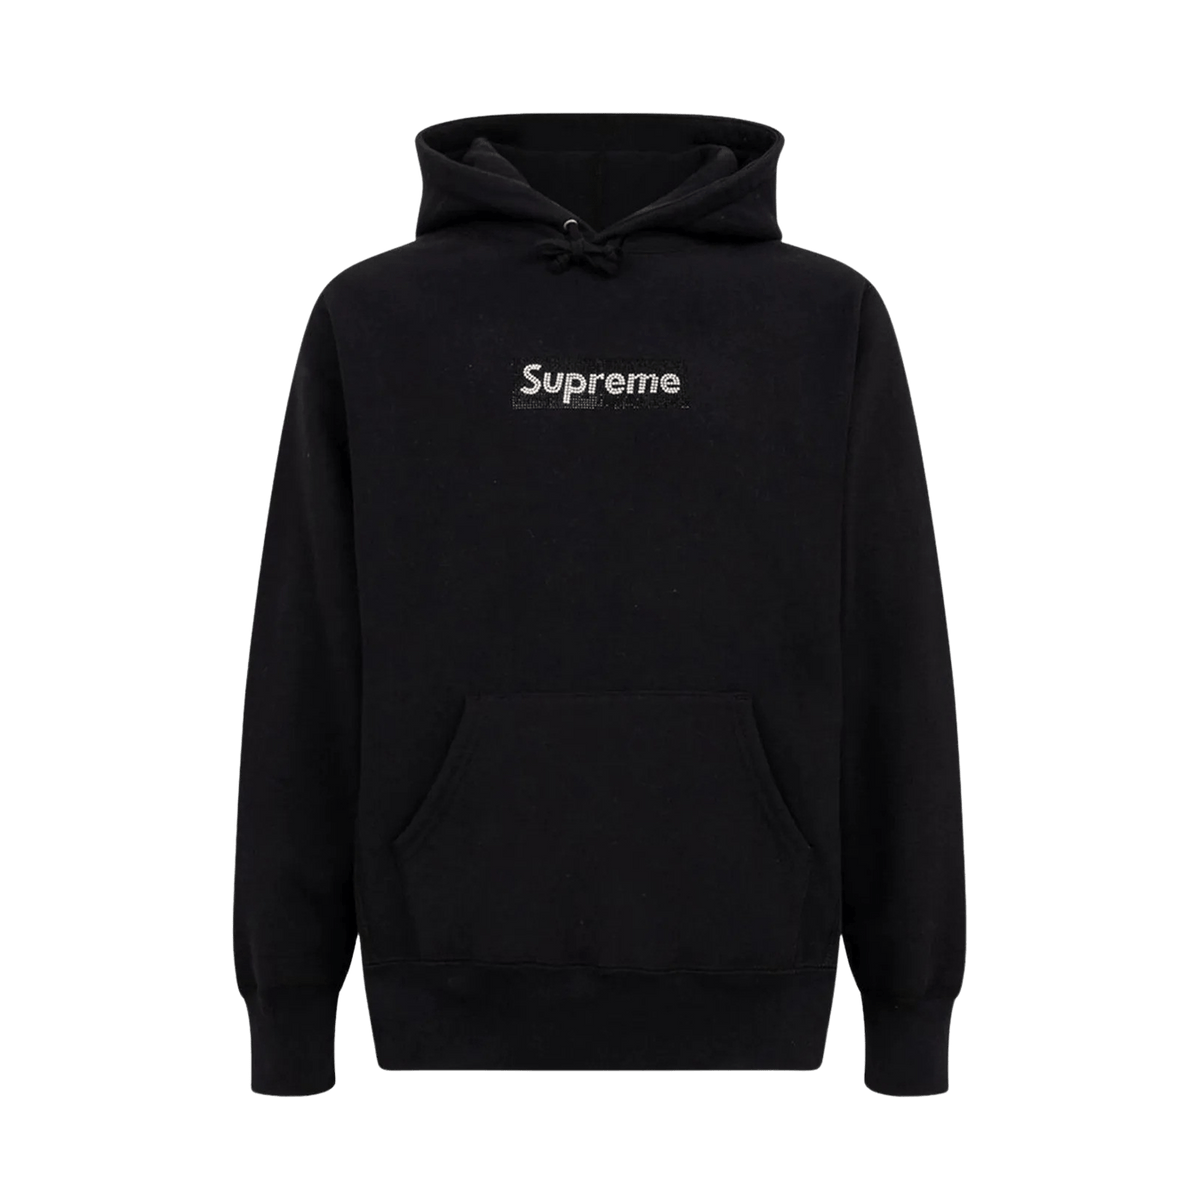 Supreme clothing, Supreme hoodie, Nike air max 90 outfit